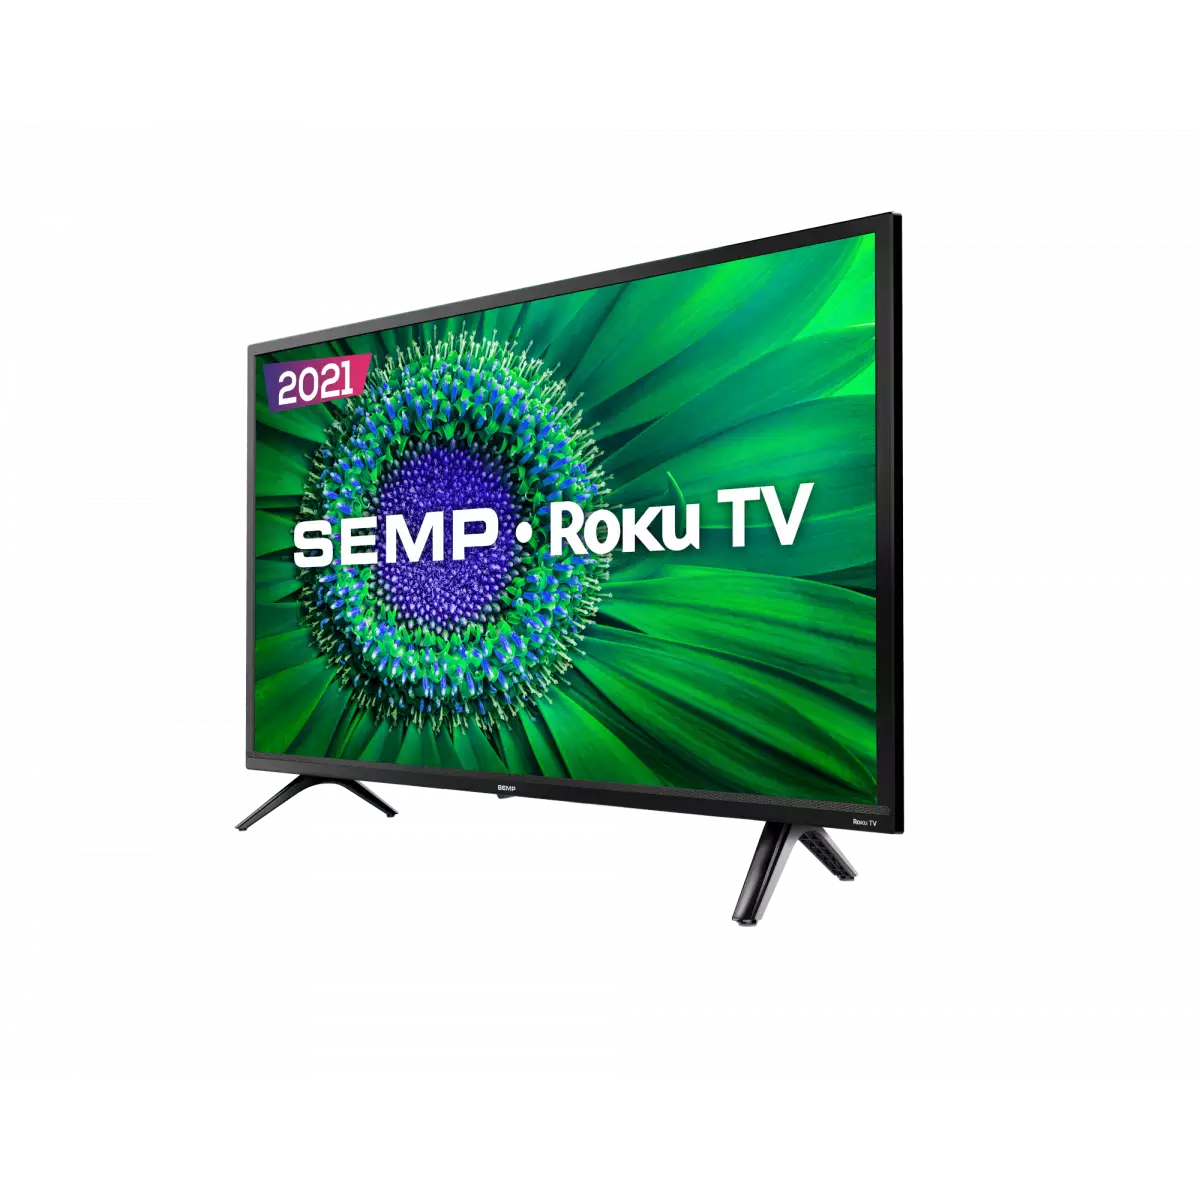 Smart Tv 43" Semp Roku LED Full HD R5500 Wi-Fi 3 HDMI Dual Band 1 USB DTV Decoder, , large image number 1